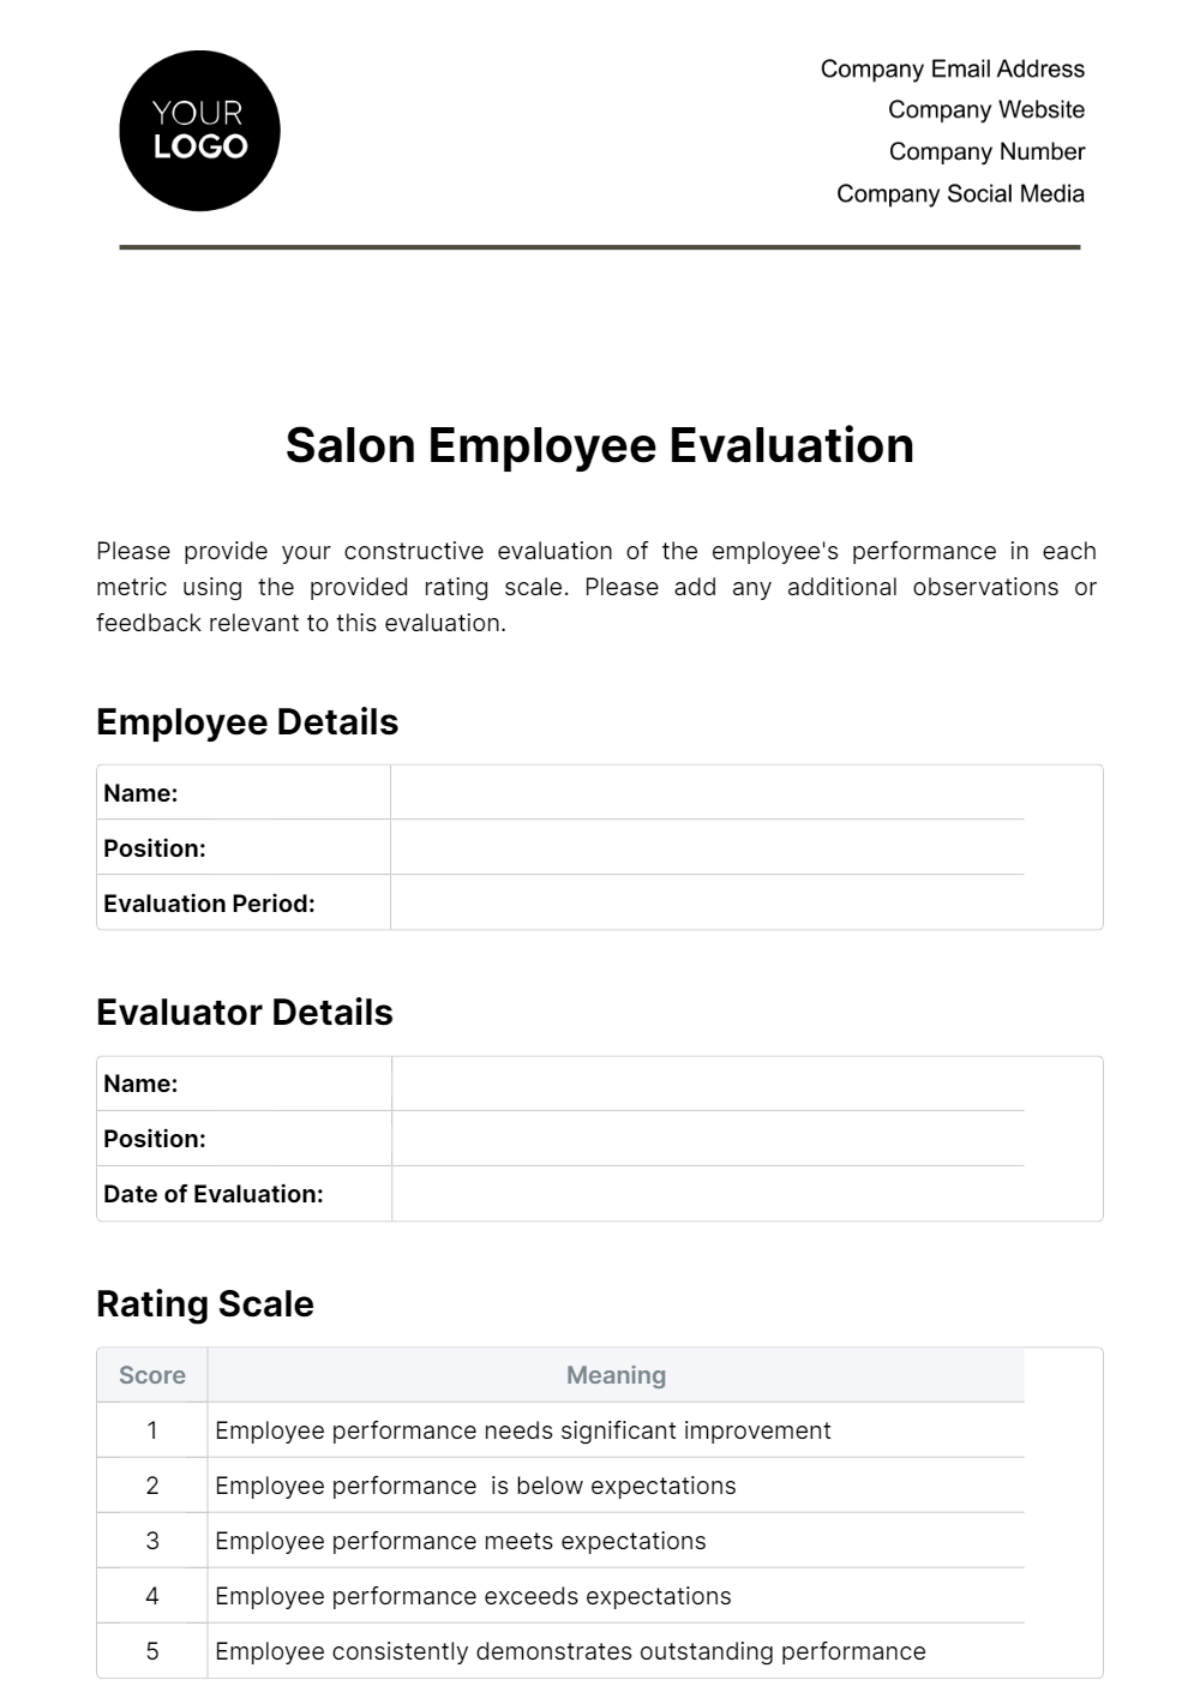 Free Salon Employee Evaluation Template